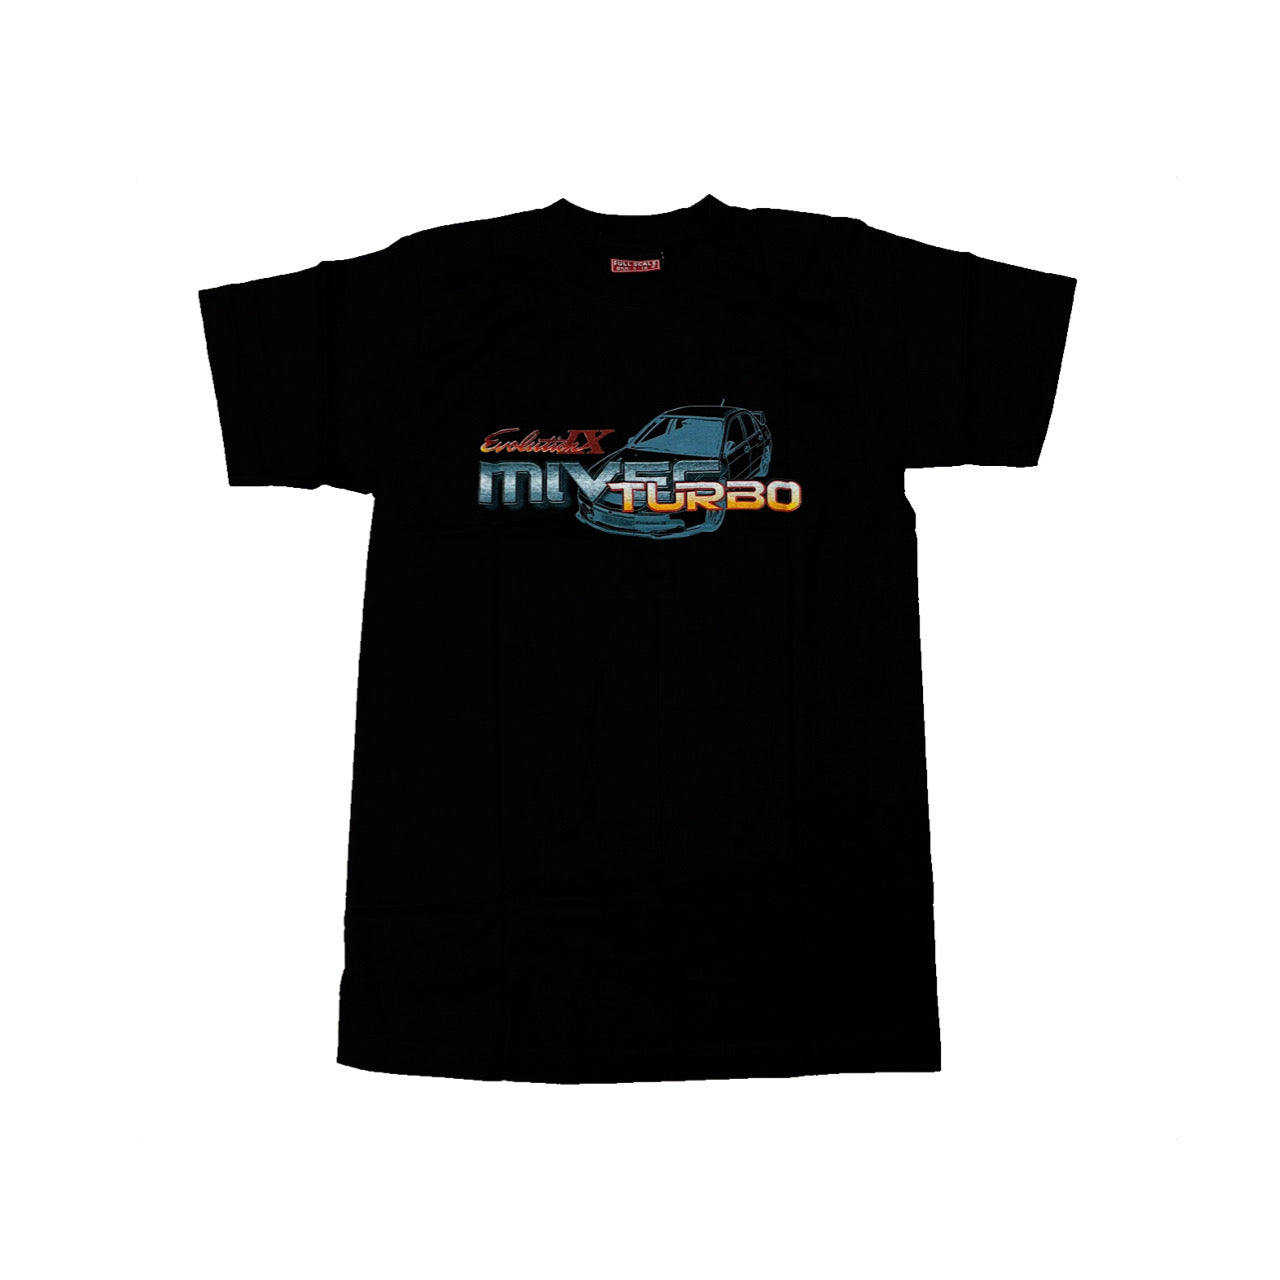 Mitsubishi Evolution IX MIVEC 4WD Turbo T-shirt Black